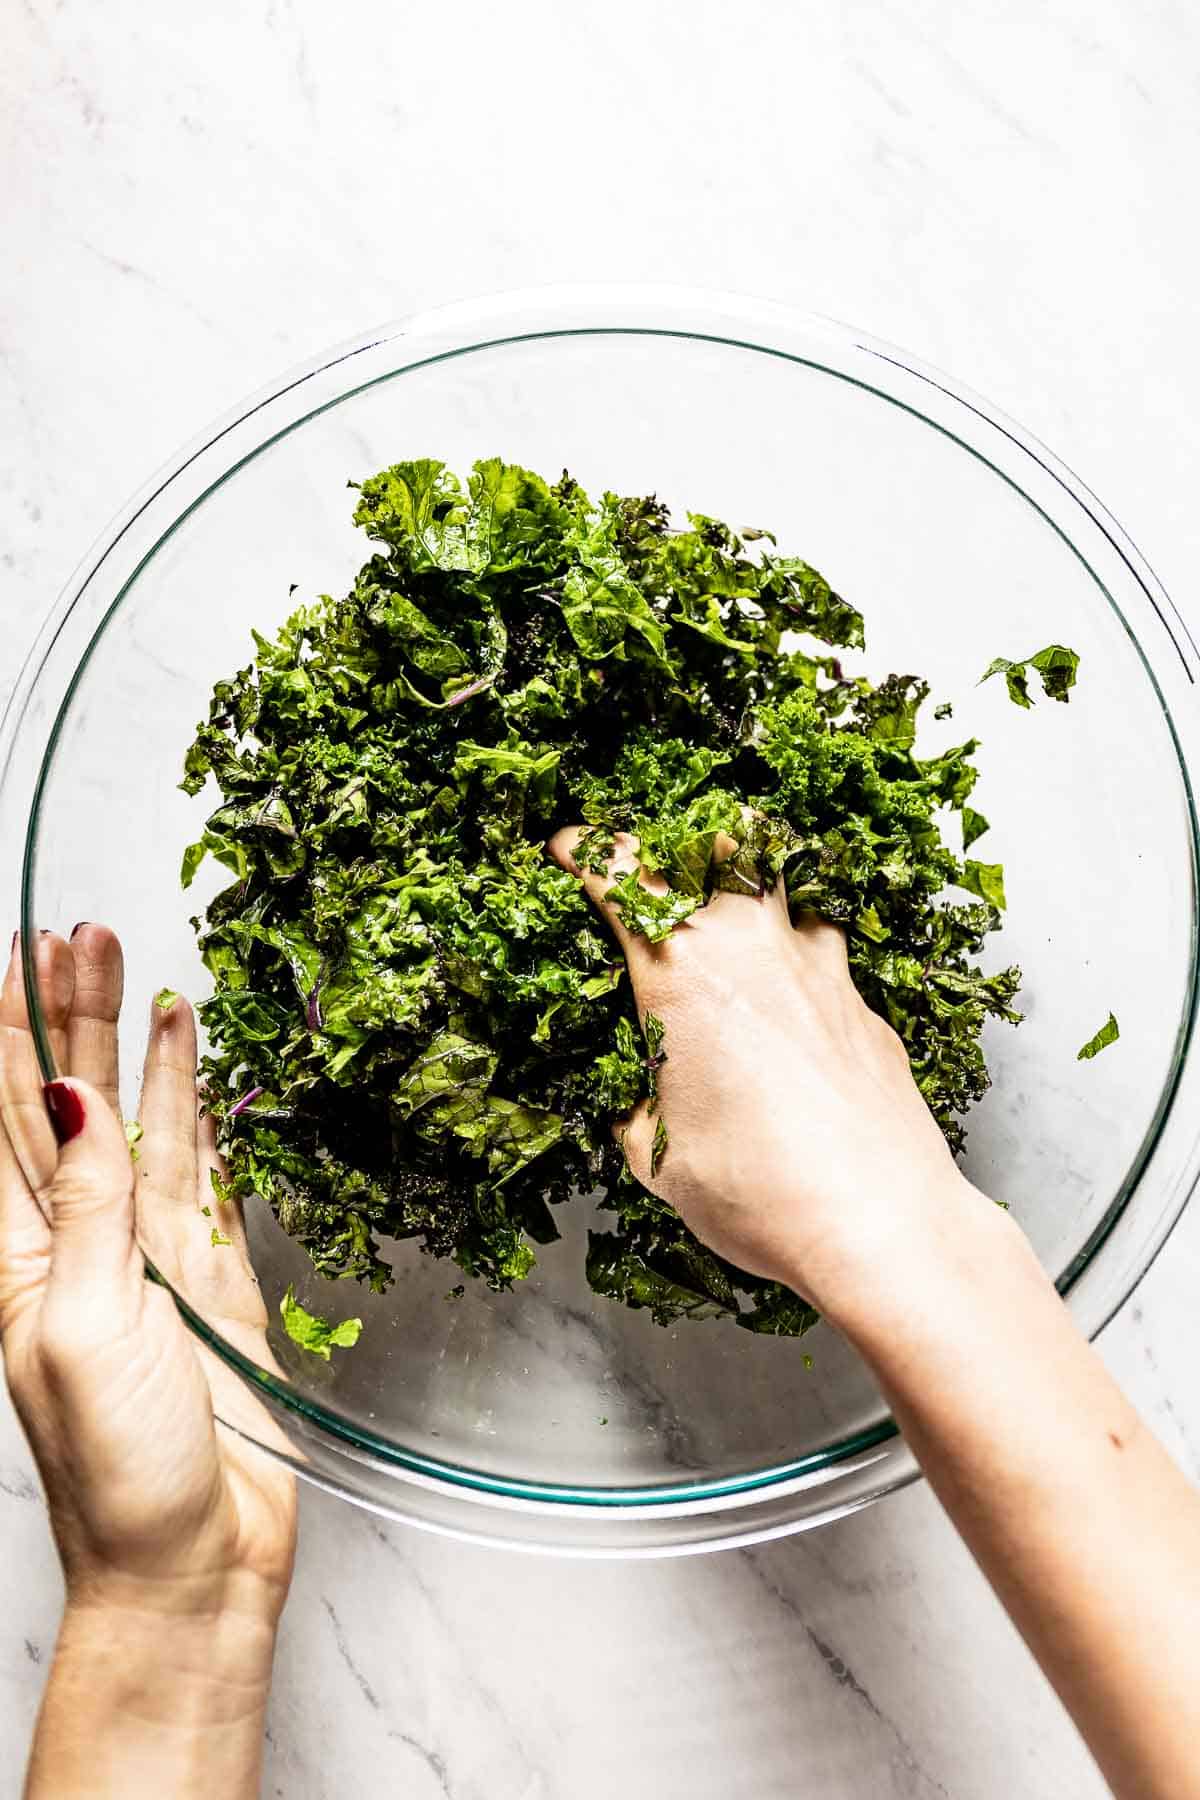 Græder Sporvogn fusionere How to Massage Kale For Salad (With or Without Oil)